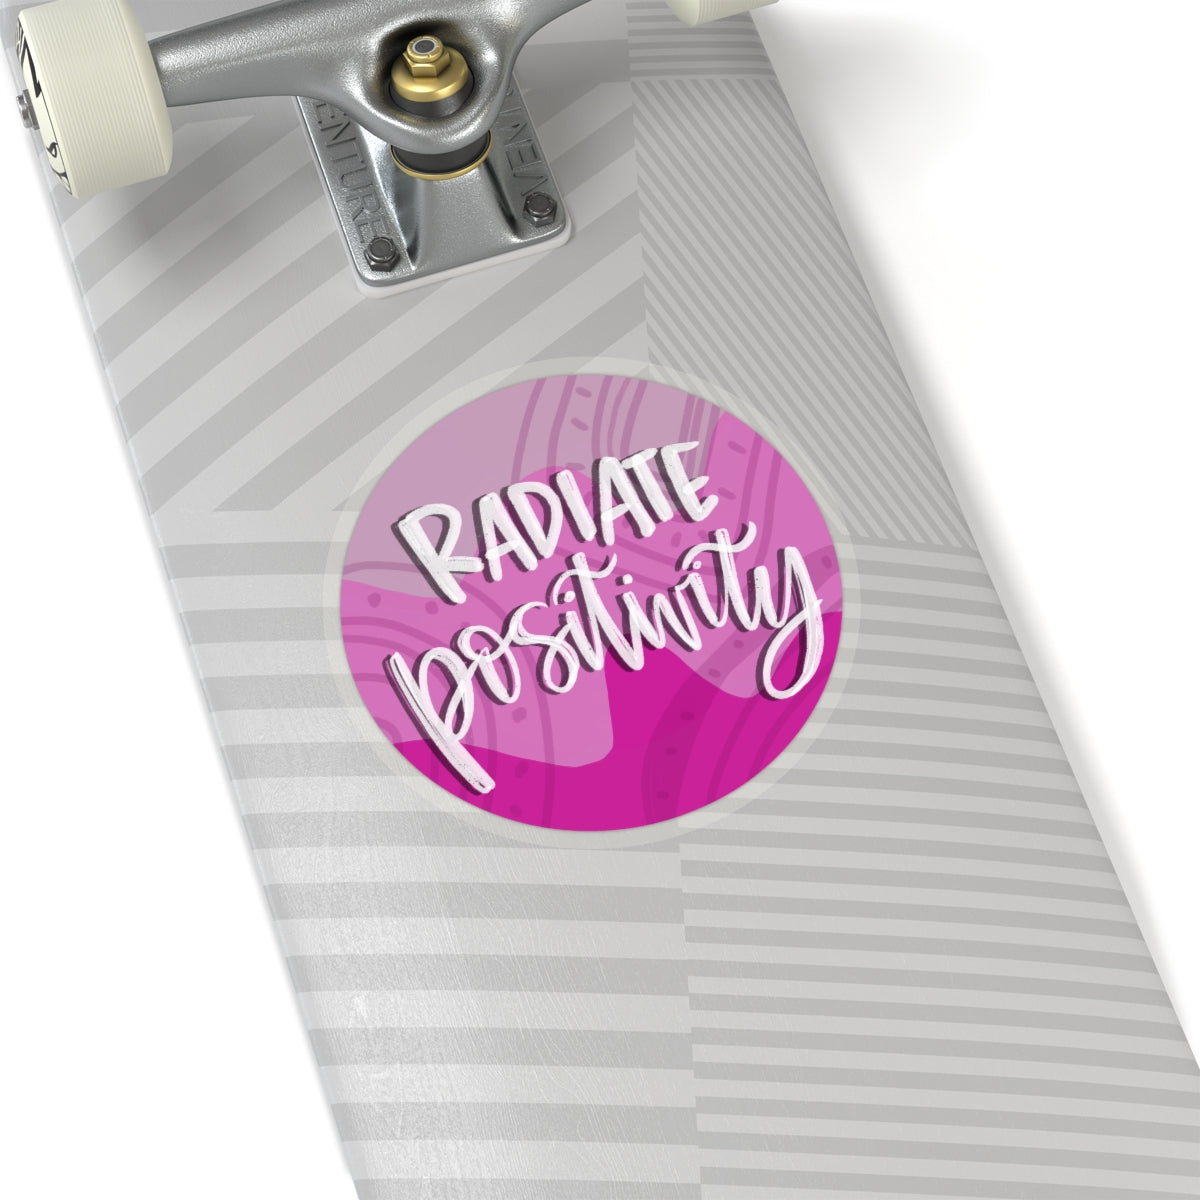 Radiate Positivity Sticker